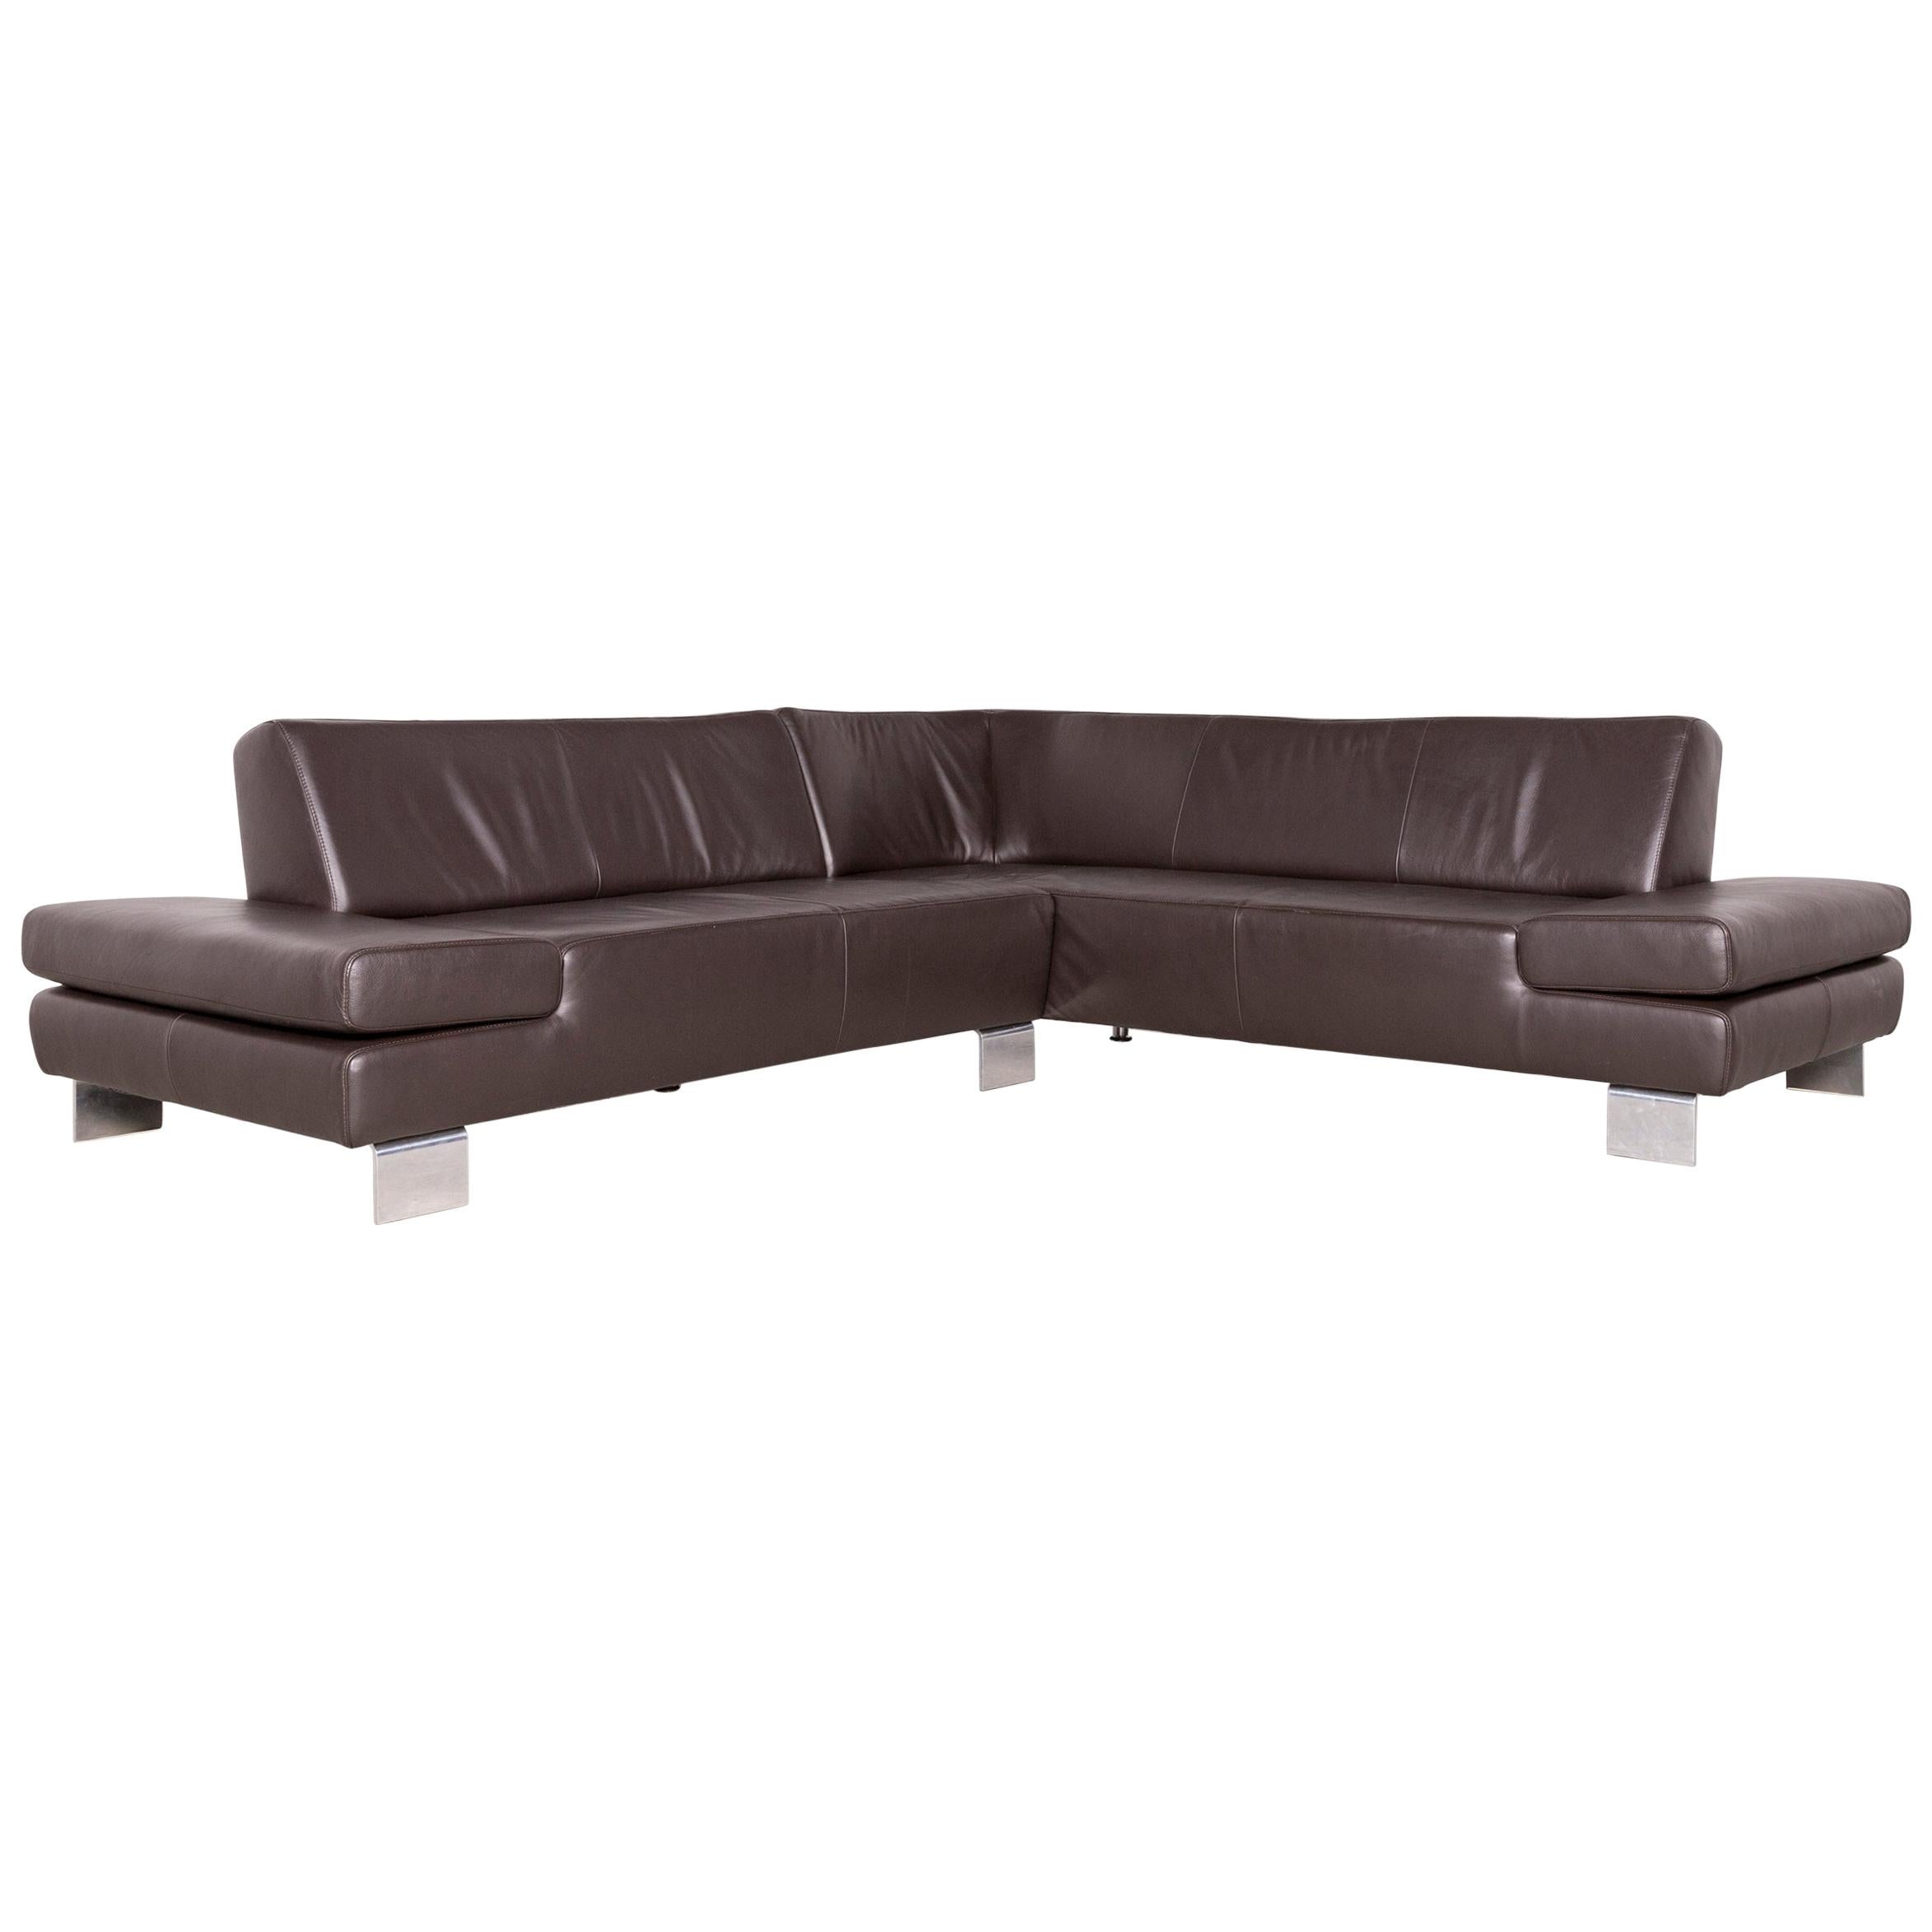 Willi Schillig Taboo Designer Leather Corner Sofa Brown Genuine Leather Couch